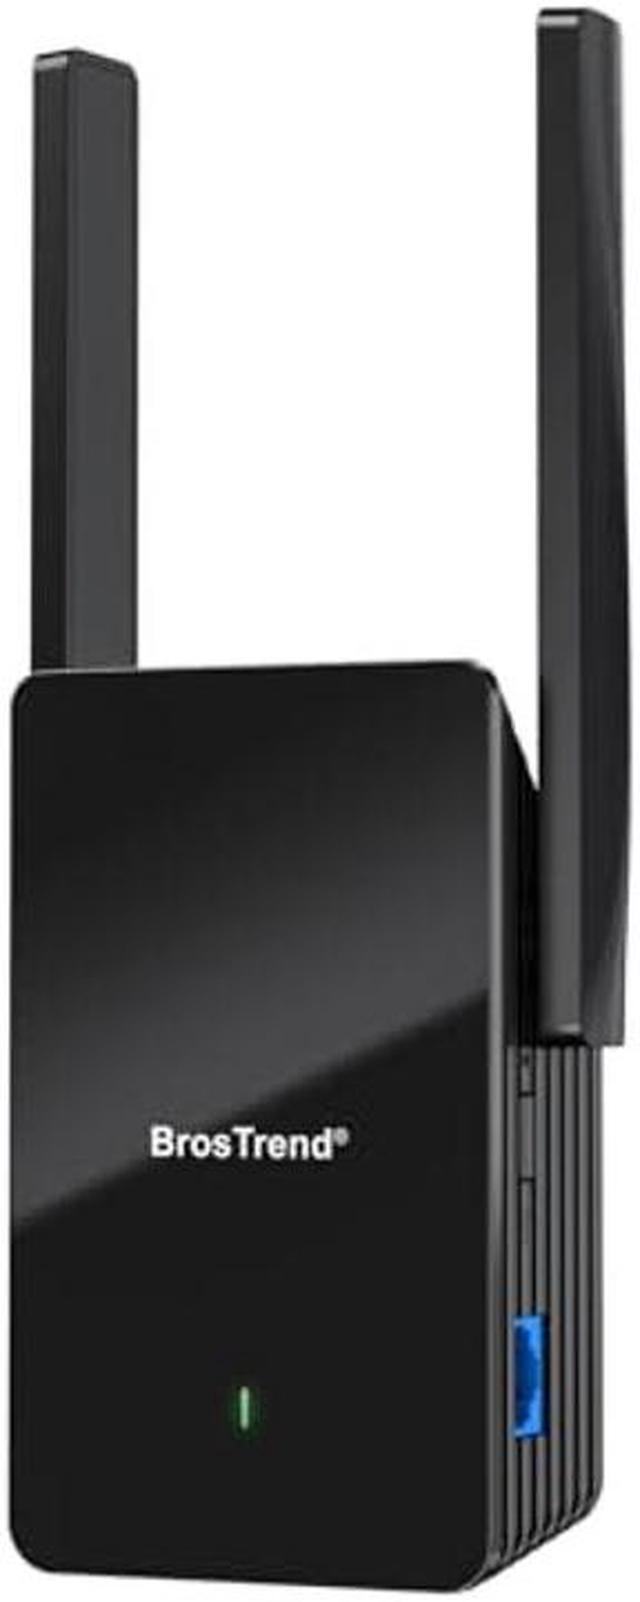 BrosTrend AX1500 WiFi Extender, Gigabit Ethernet Port